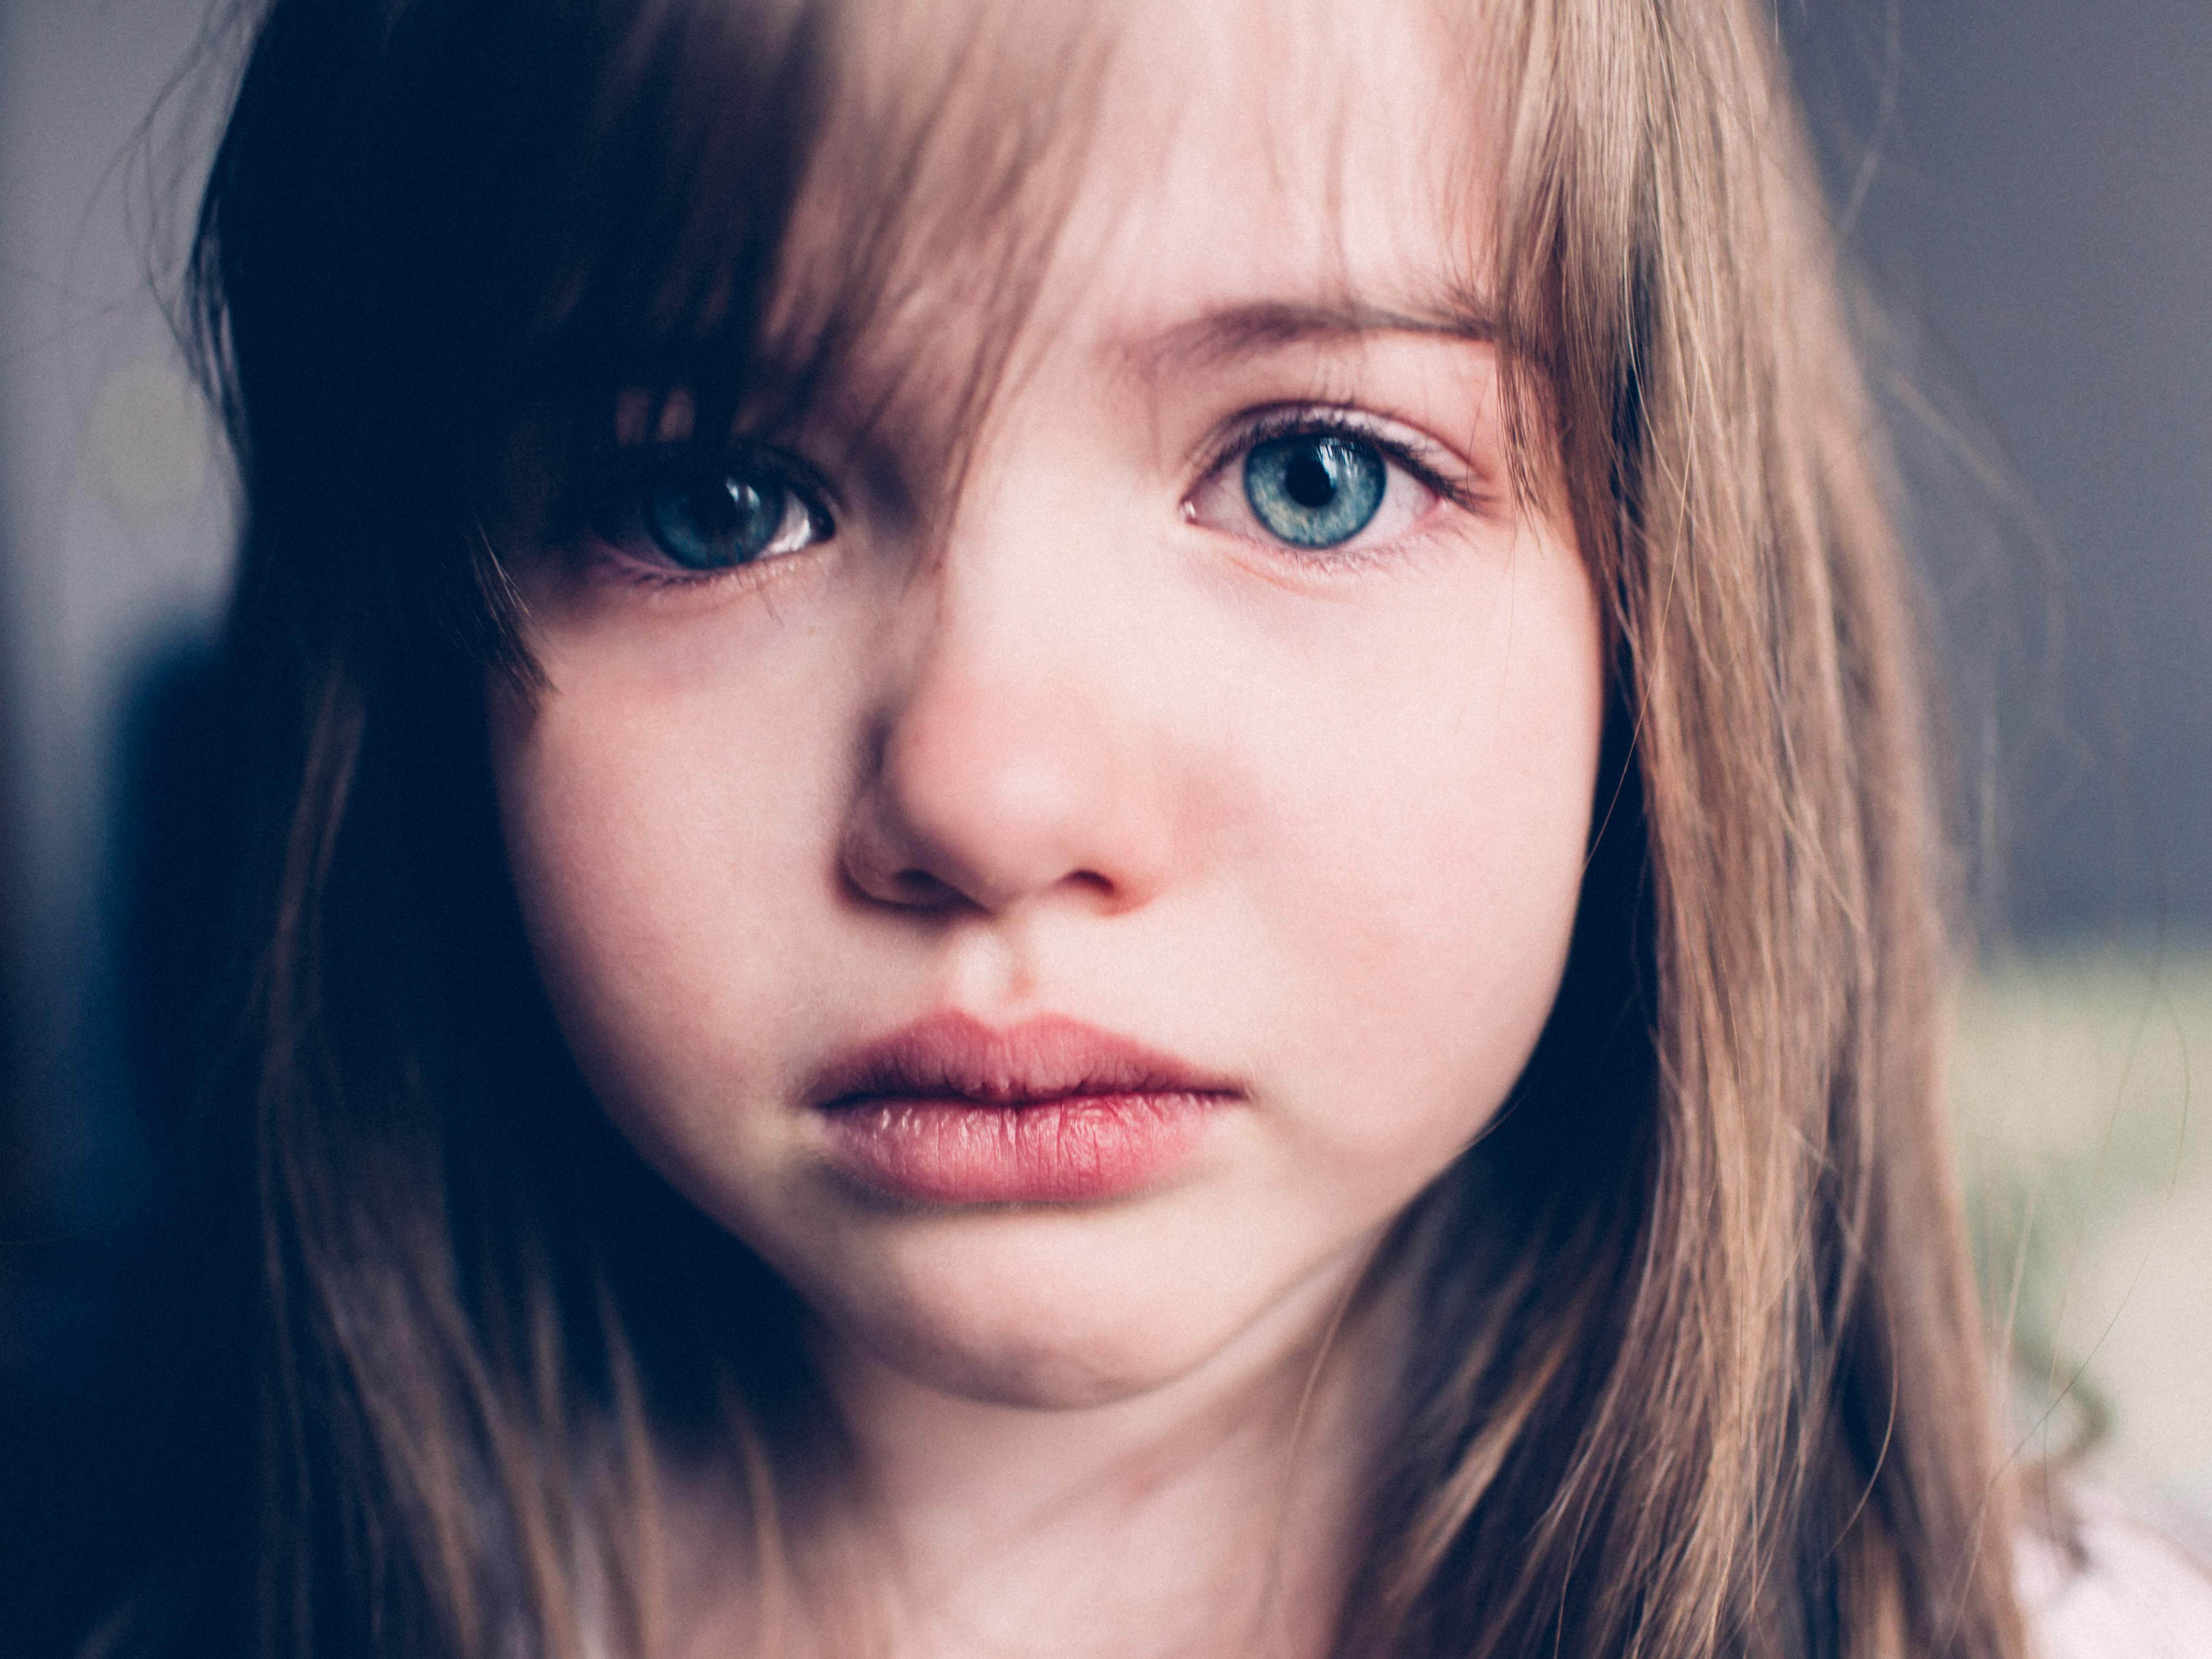 A sad child | Source: Shutterstock